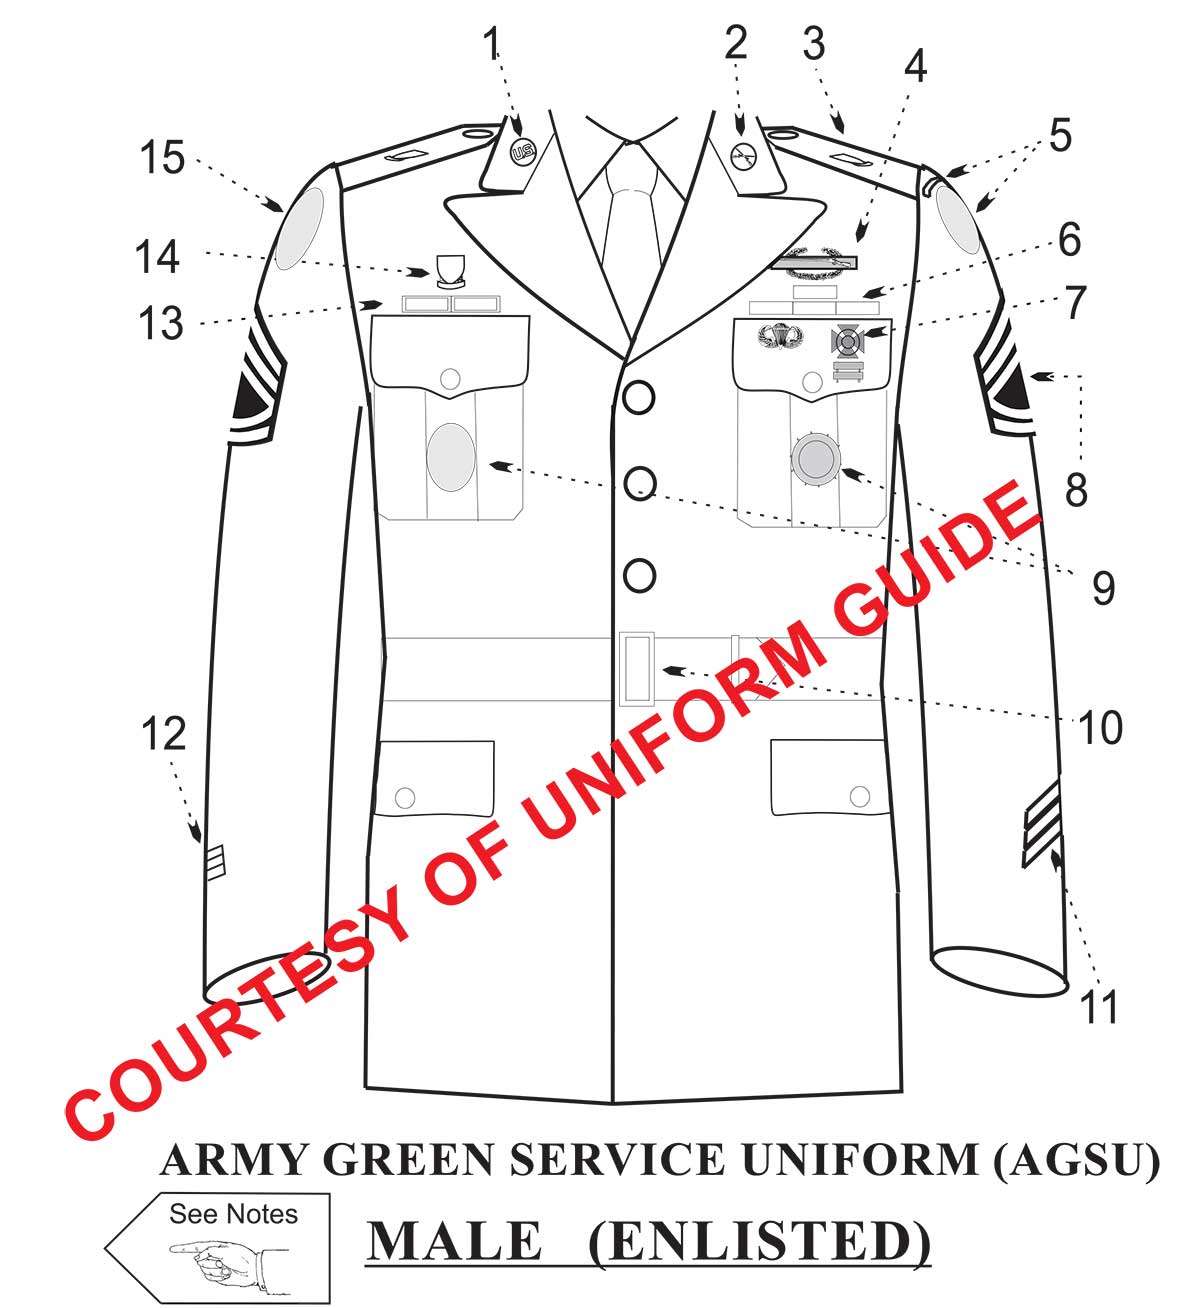 Enlisted army class b uniform setup guide - bastarealtime